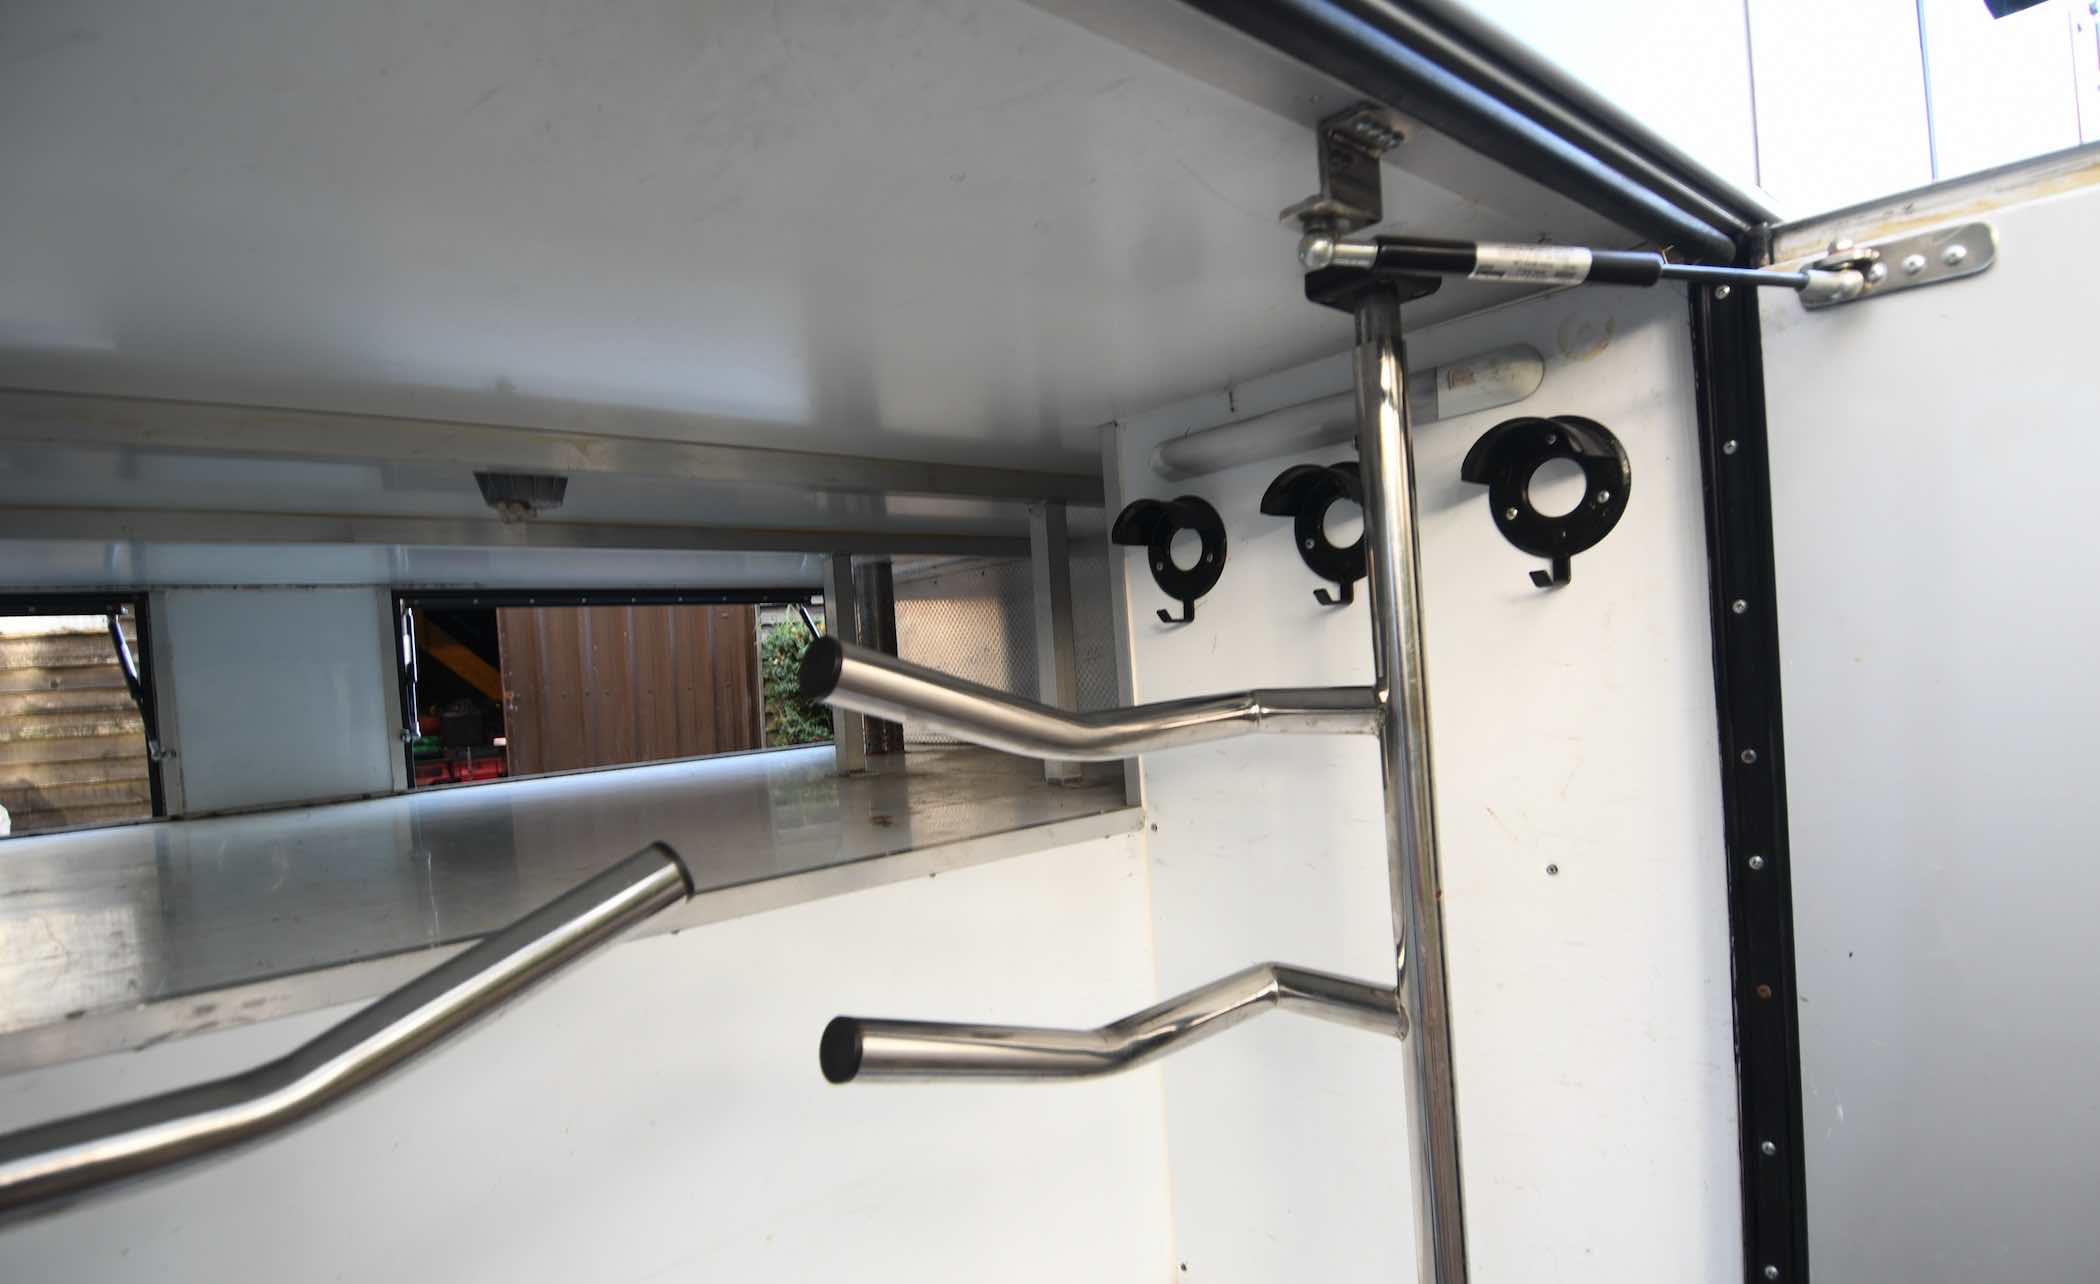 Lovely 7.5-tonne quality coach-built Whittaker Horsebox